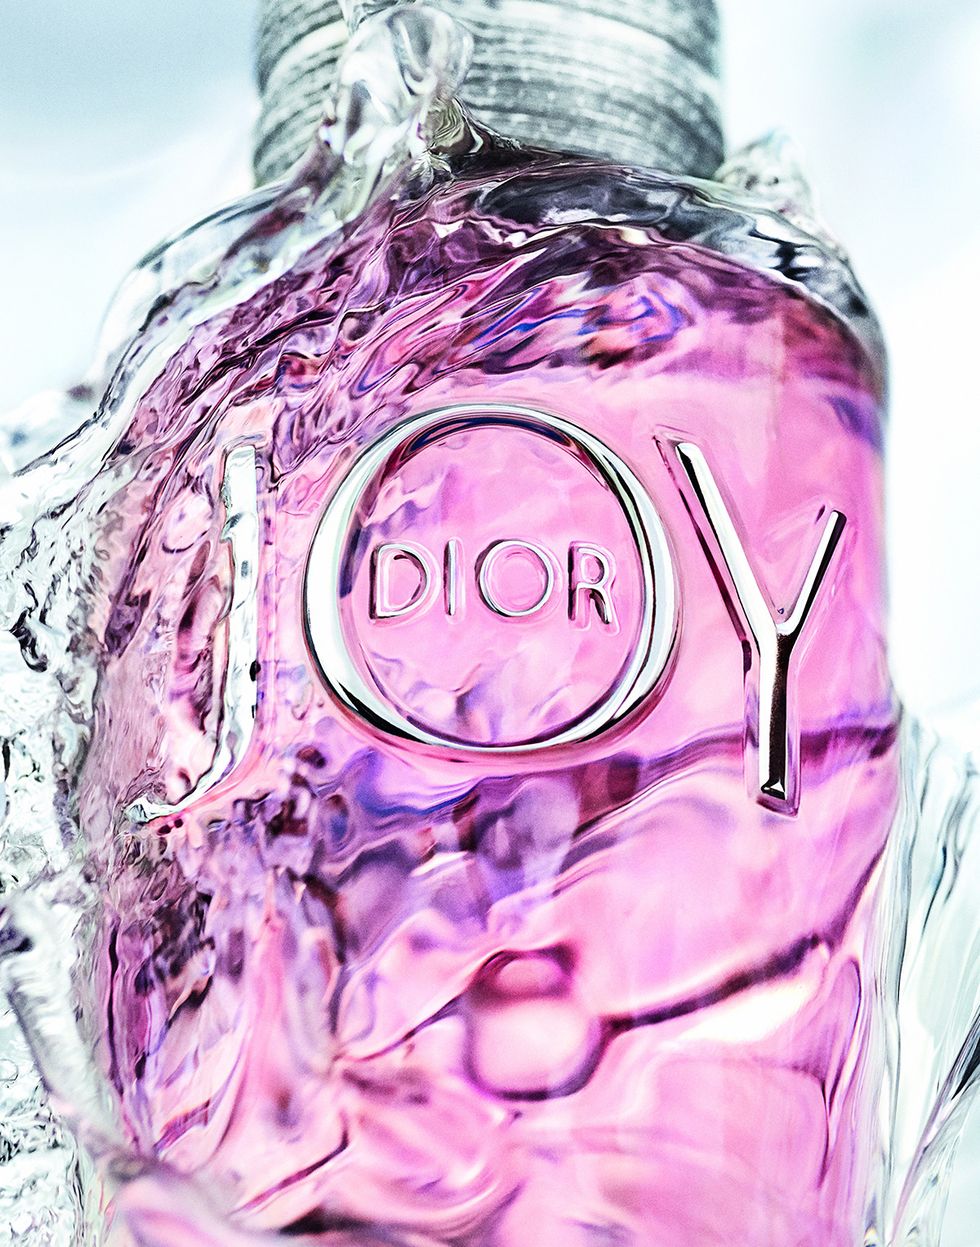 Jennifer Lawrence profumo JOY by Dior 